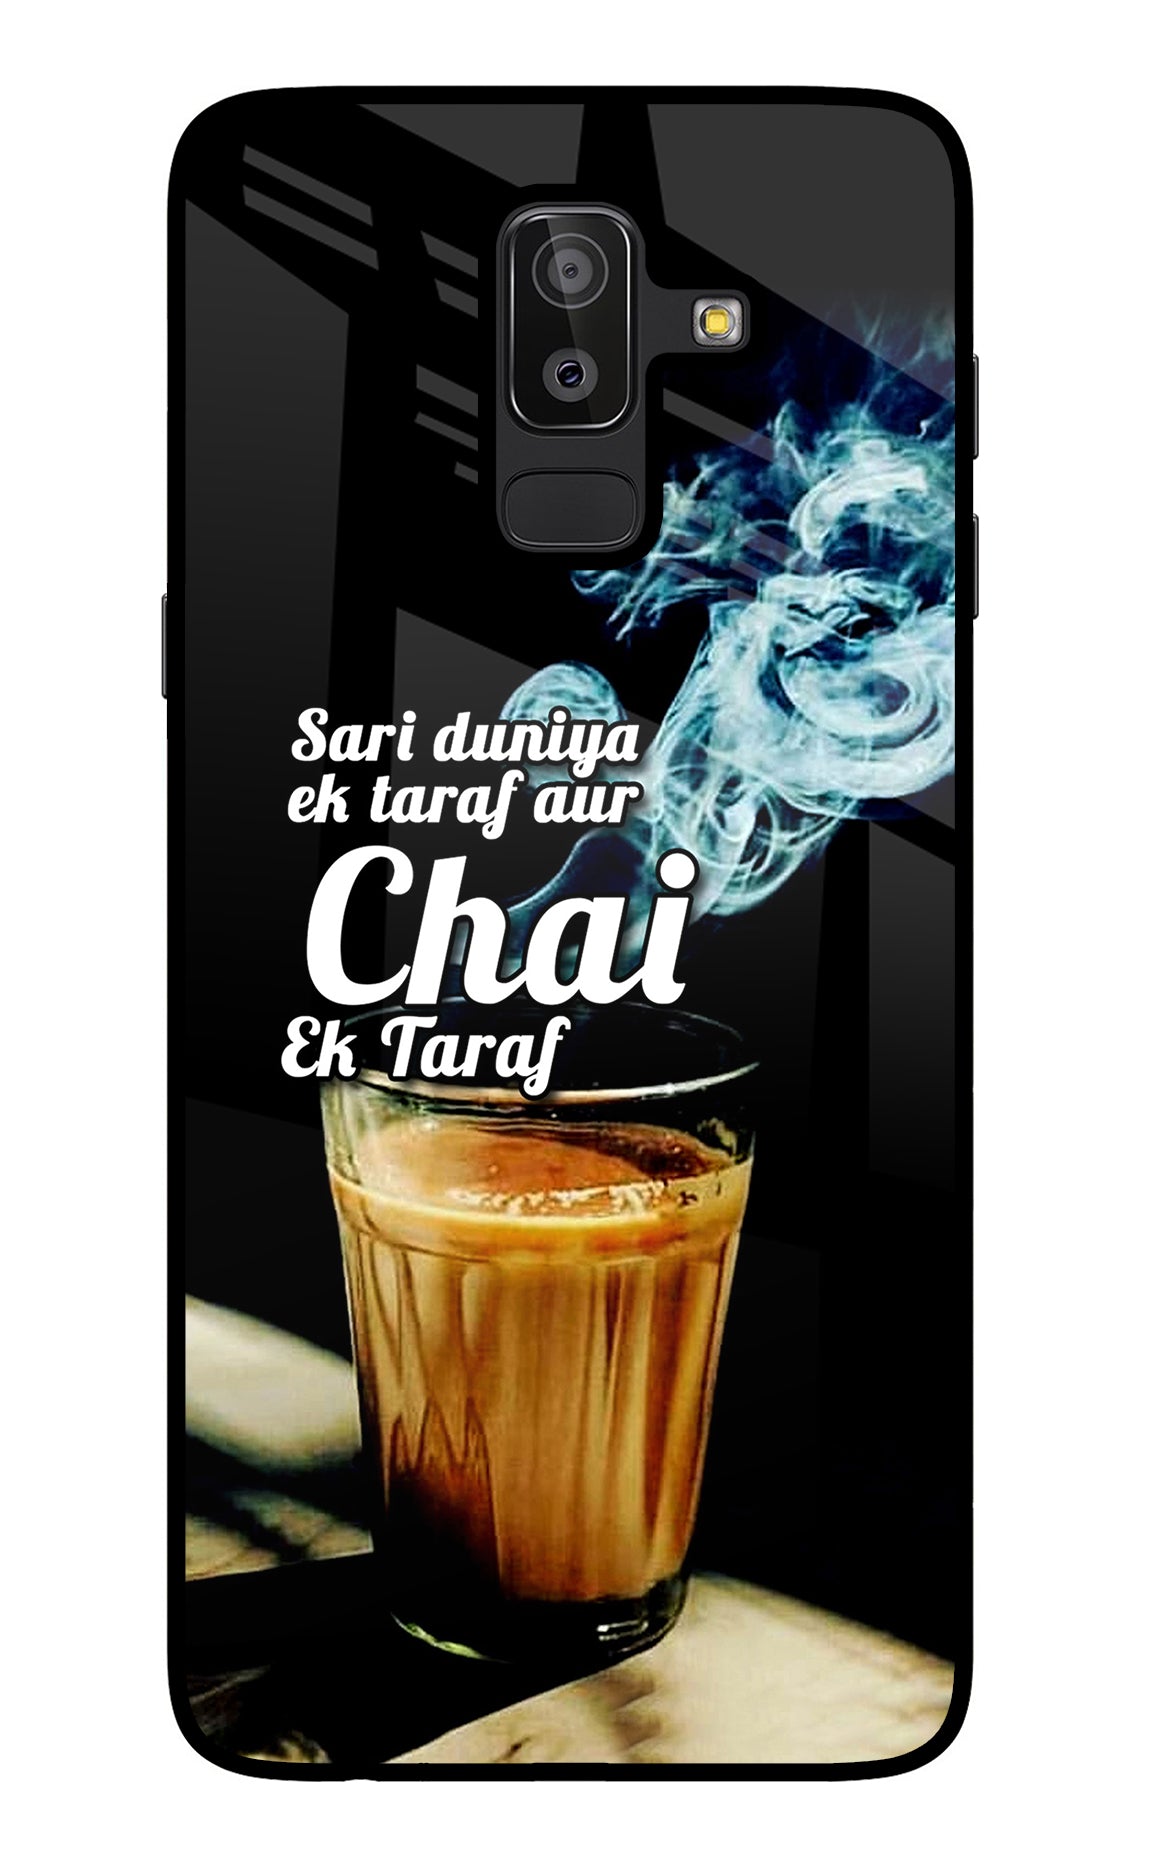 Chai Ek Taraf Quote Samsung J8 Glass Case